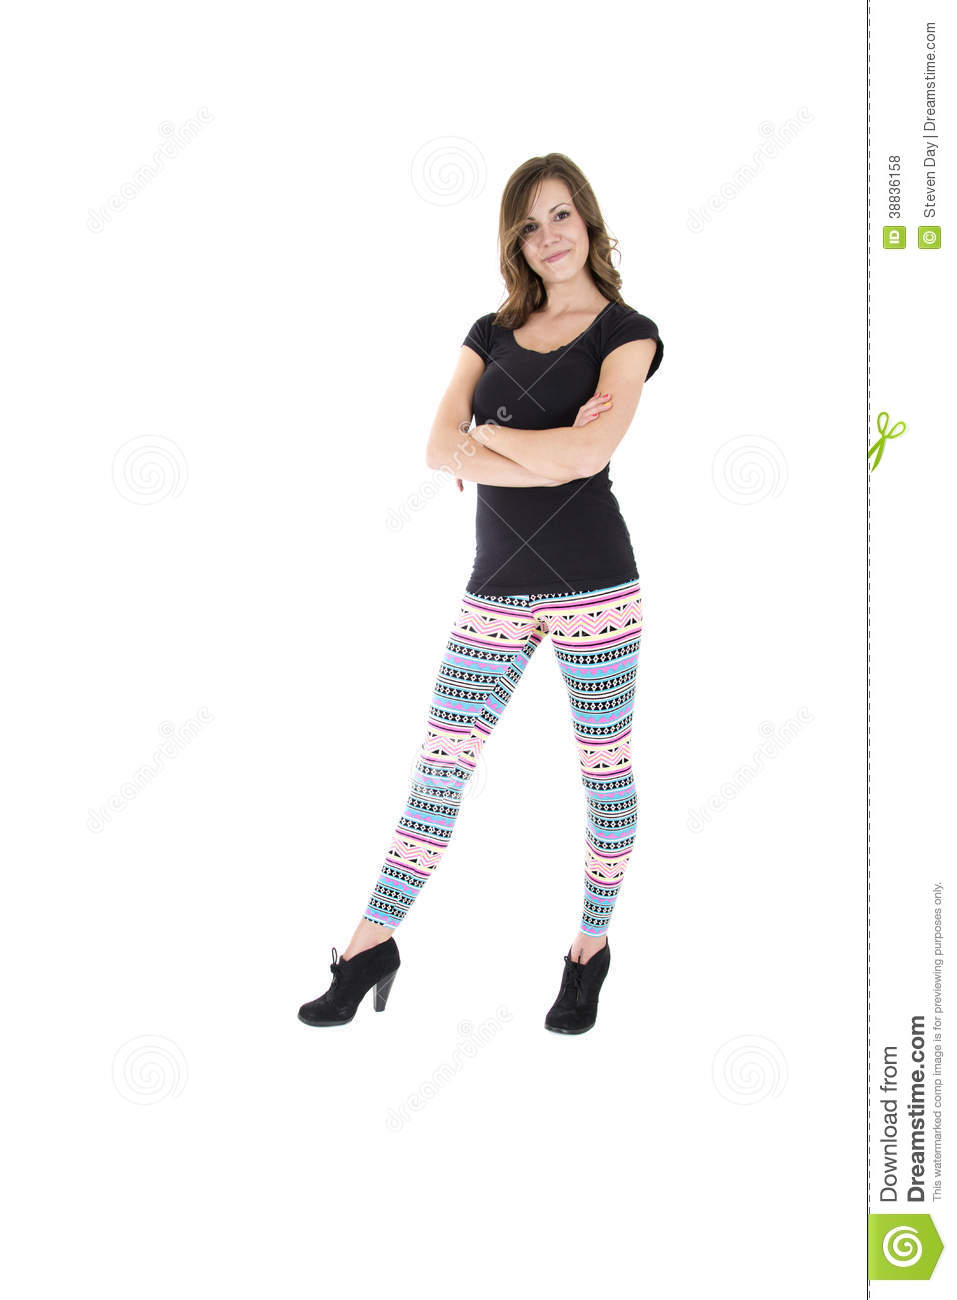 Female Model Wearing Colorful Leggings Stock Photo   Image  38836158